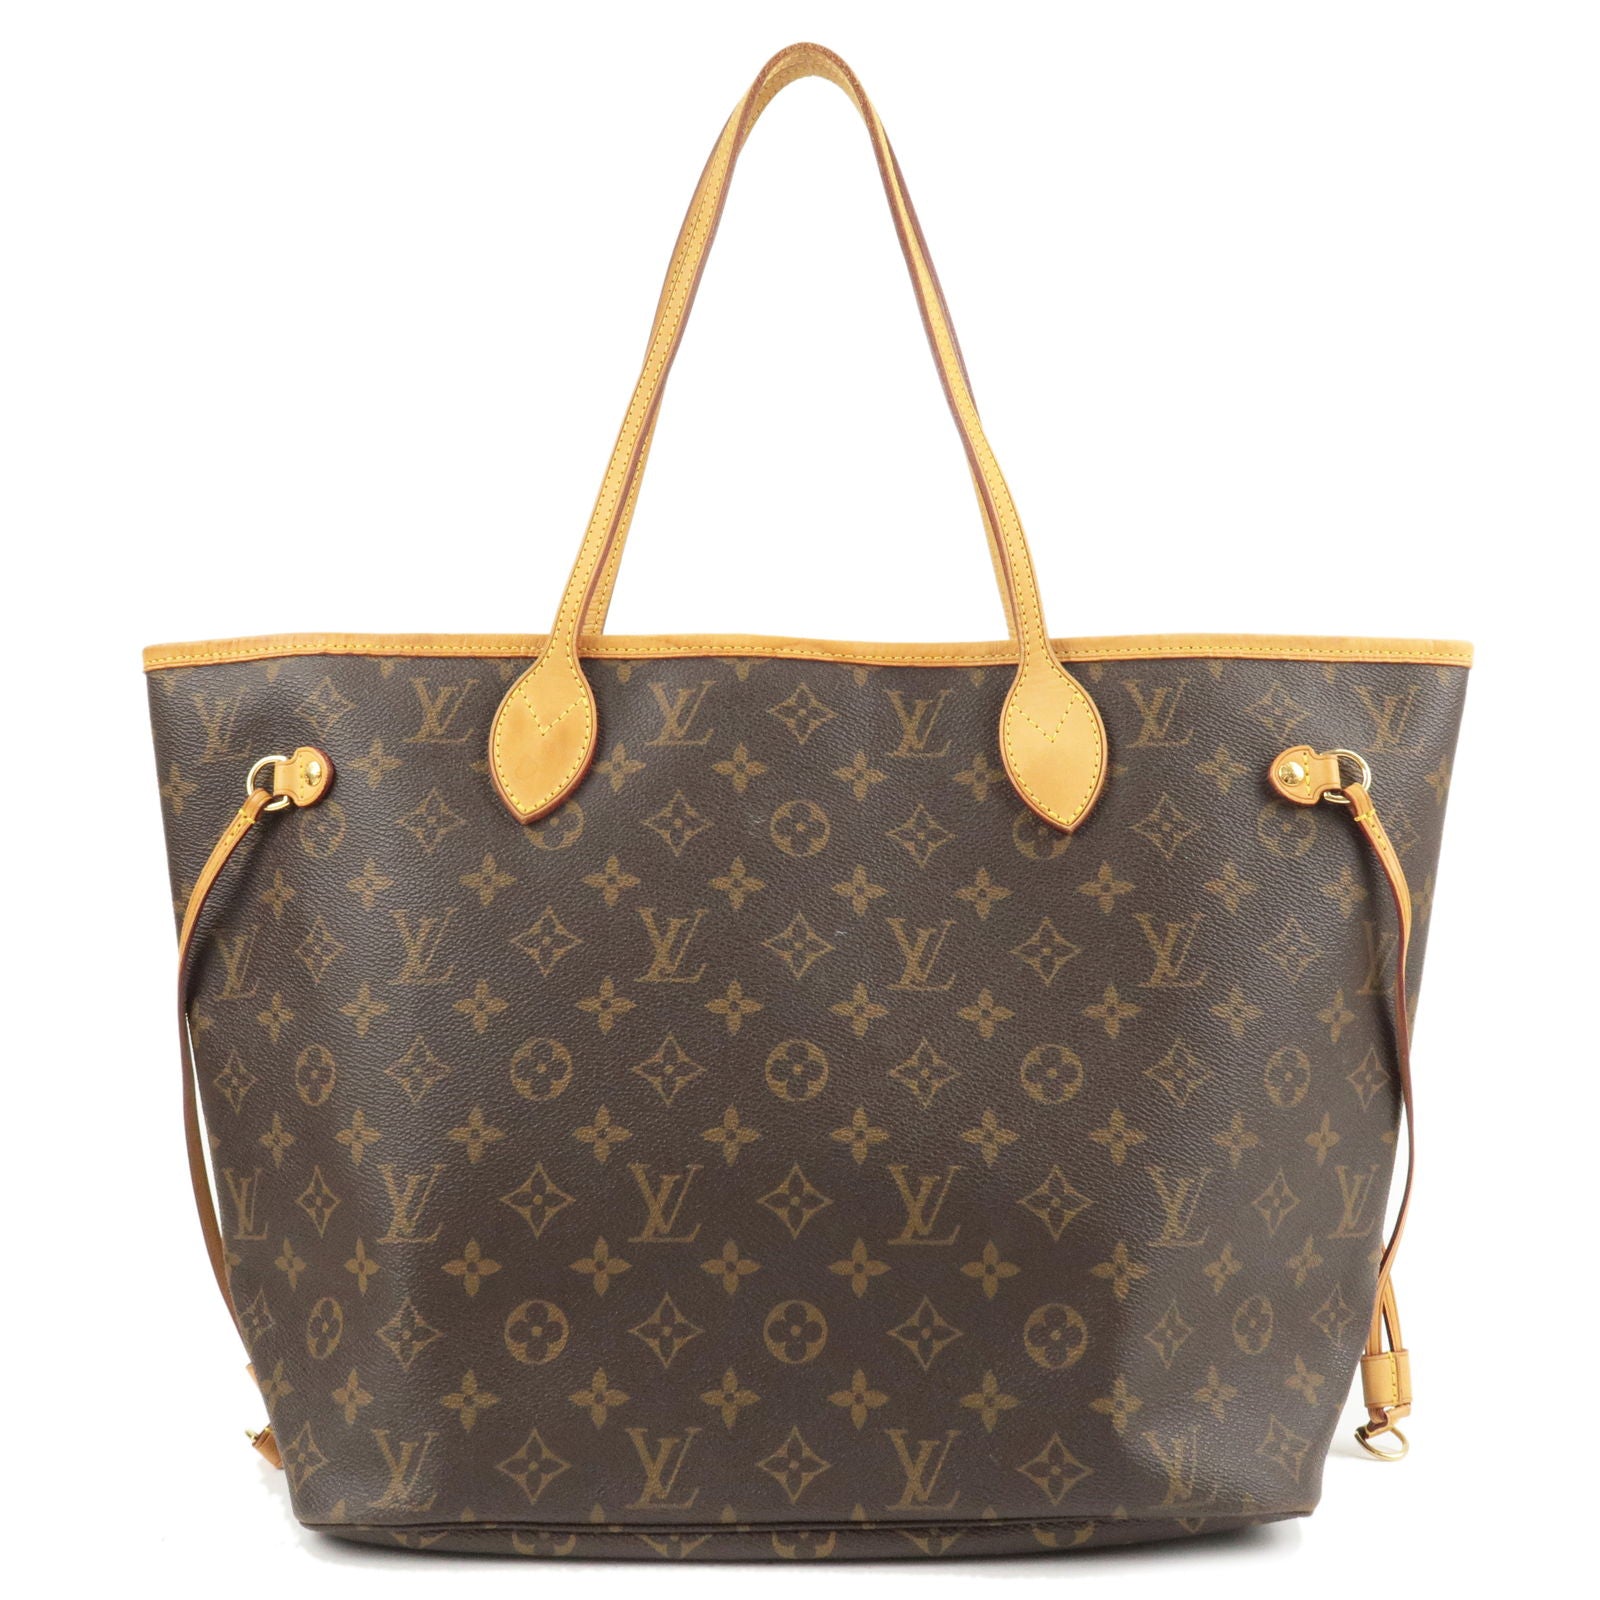 LOUIS VUITTON Handbags Louis Vuitton Patent Leather For Female for Women